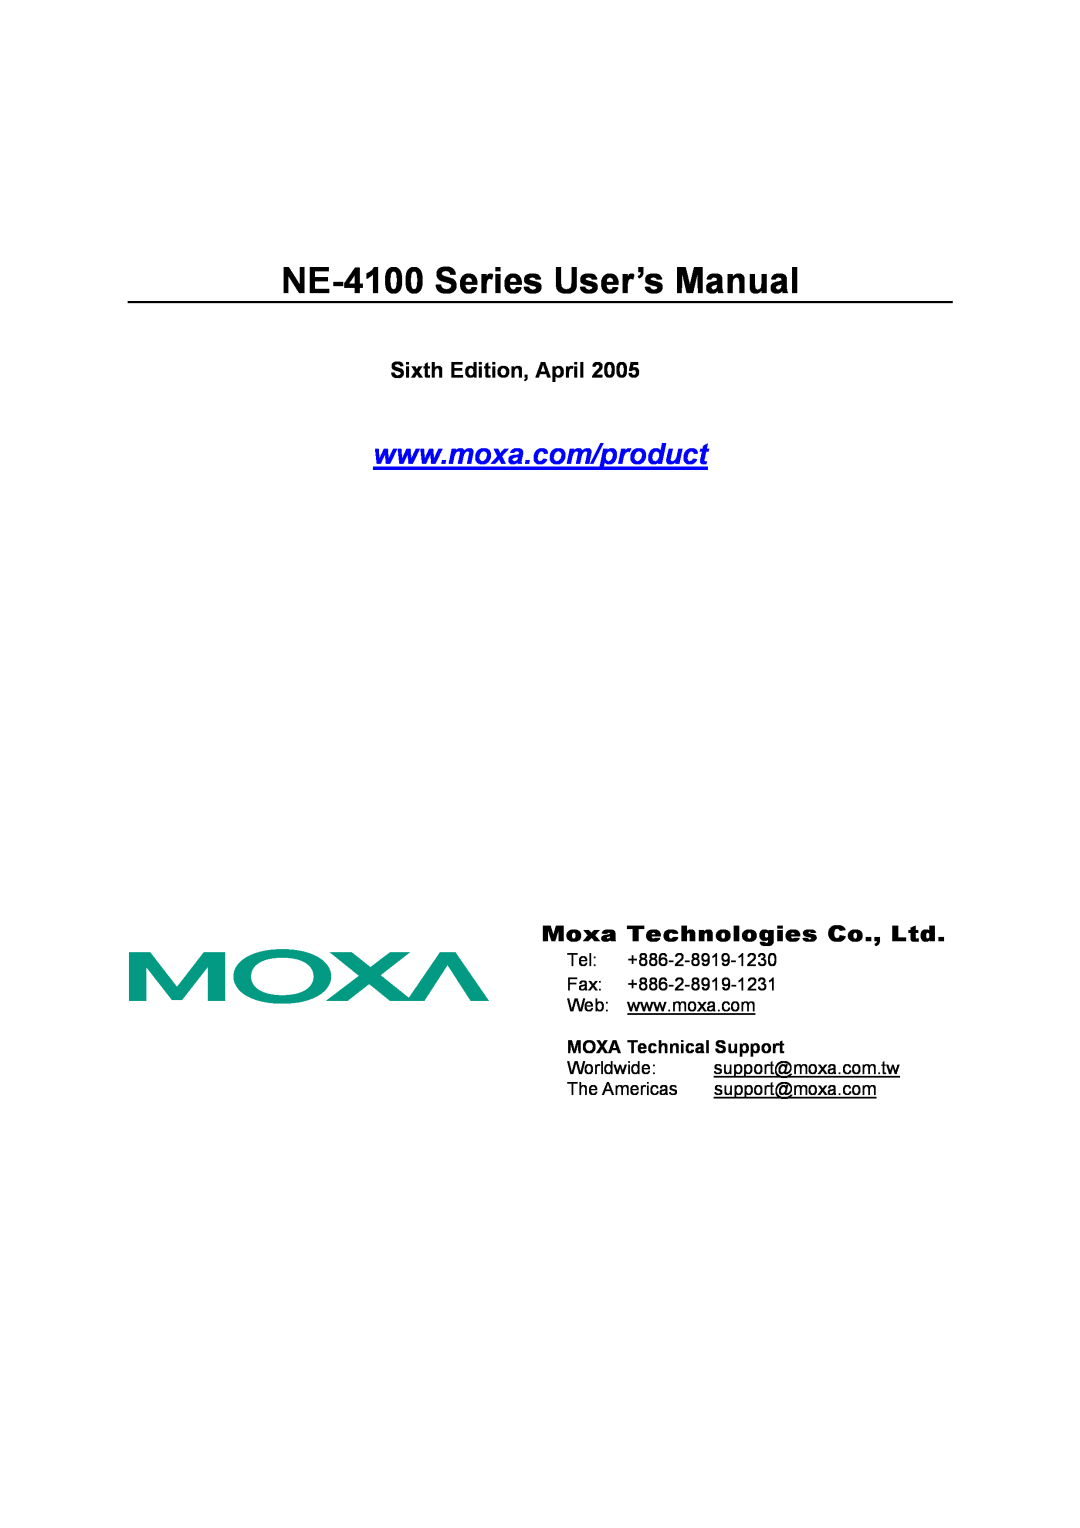 Moxa Technologies user manual NE-4100 Series User’s Manual, Sixth Edition, April, MOXA Technical Support, Worldwide 